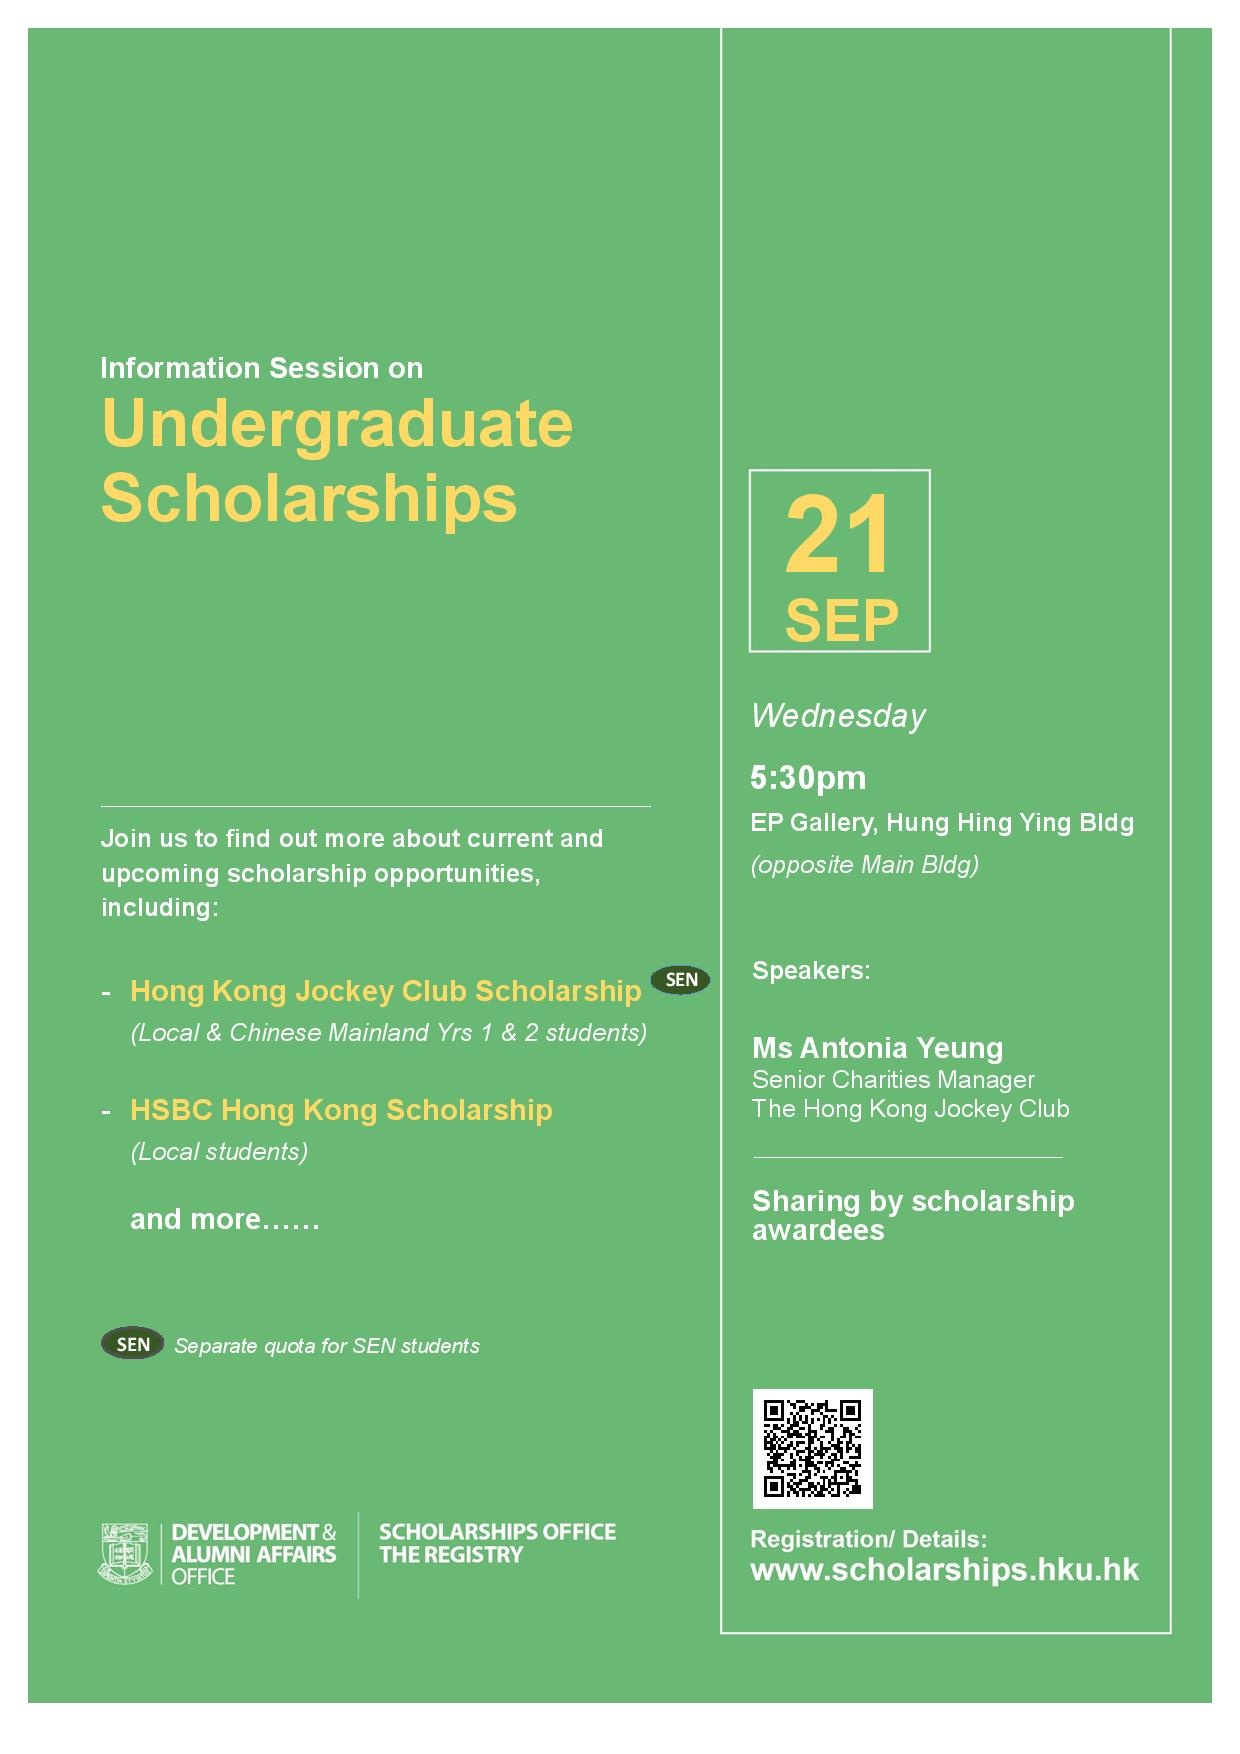 Information Session on Undergraduate Scholarships